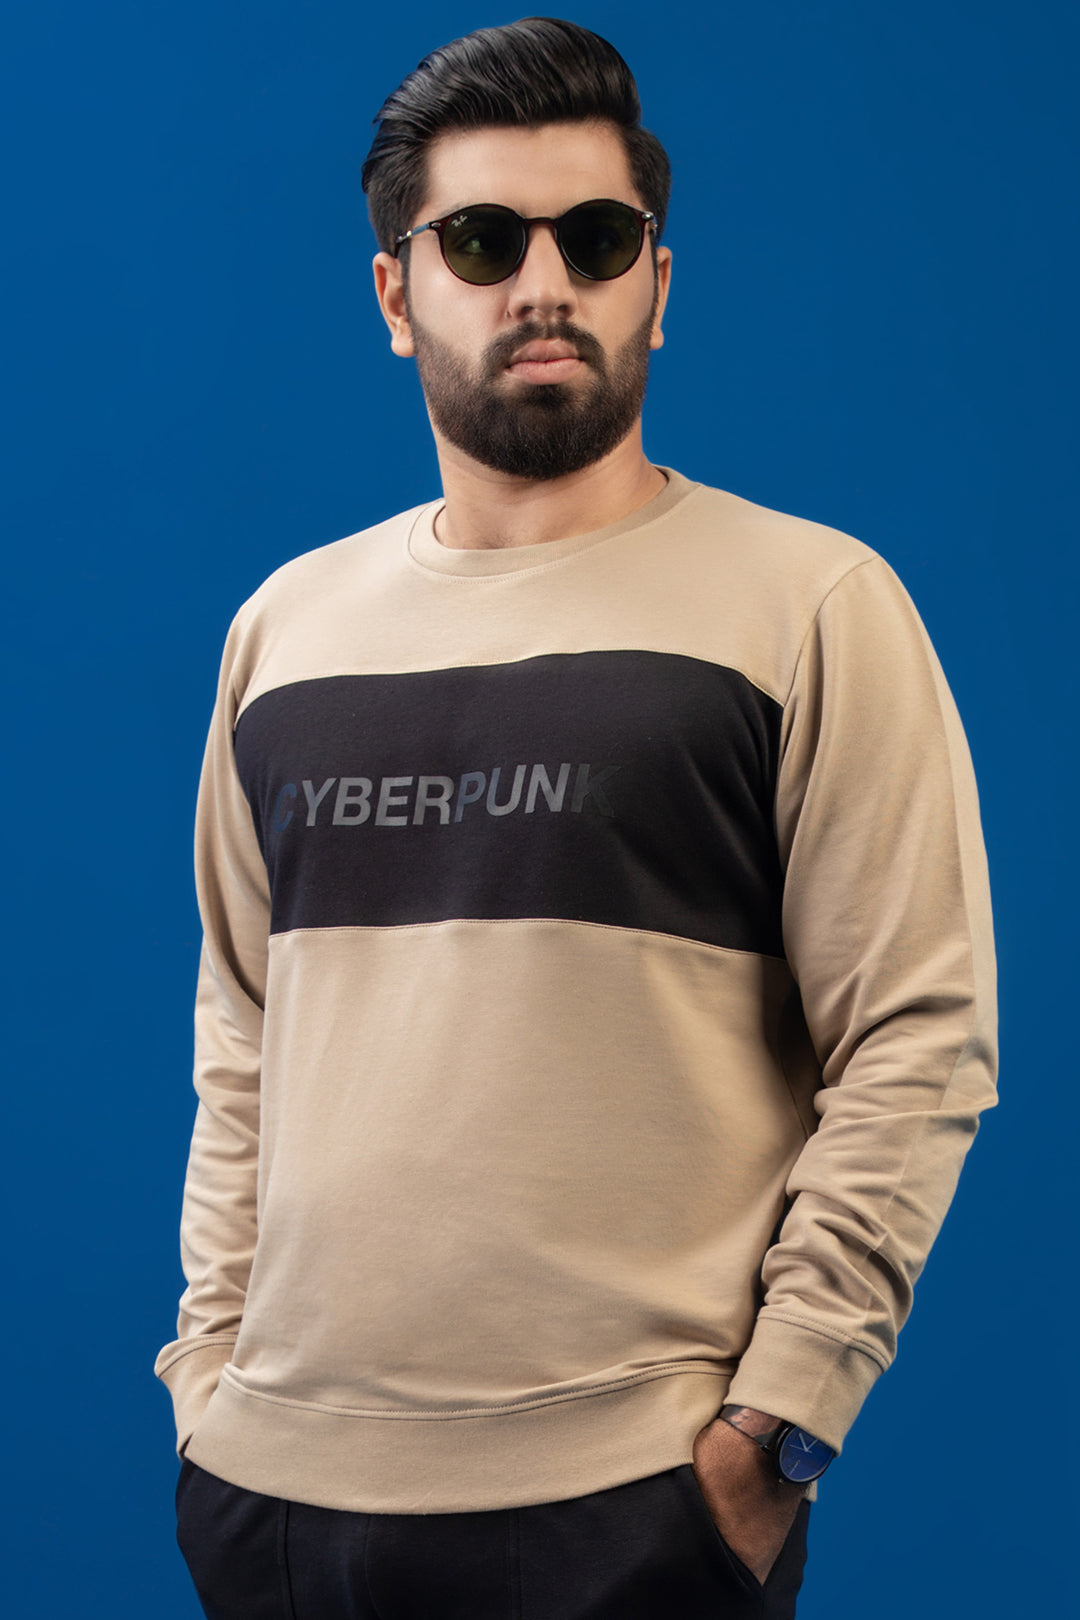 Black Paneled CyberPunk Printed Sweatshirt (Plus Size) - W23 - MSW075P